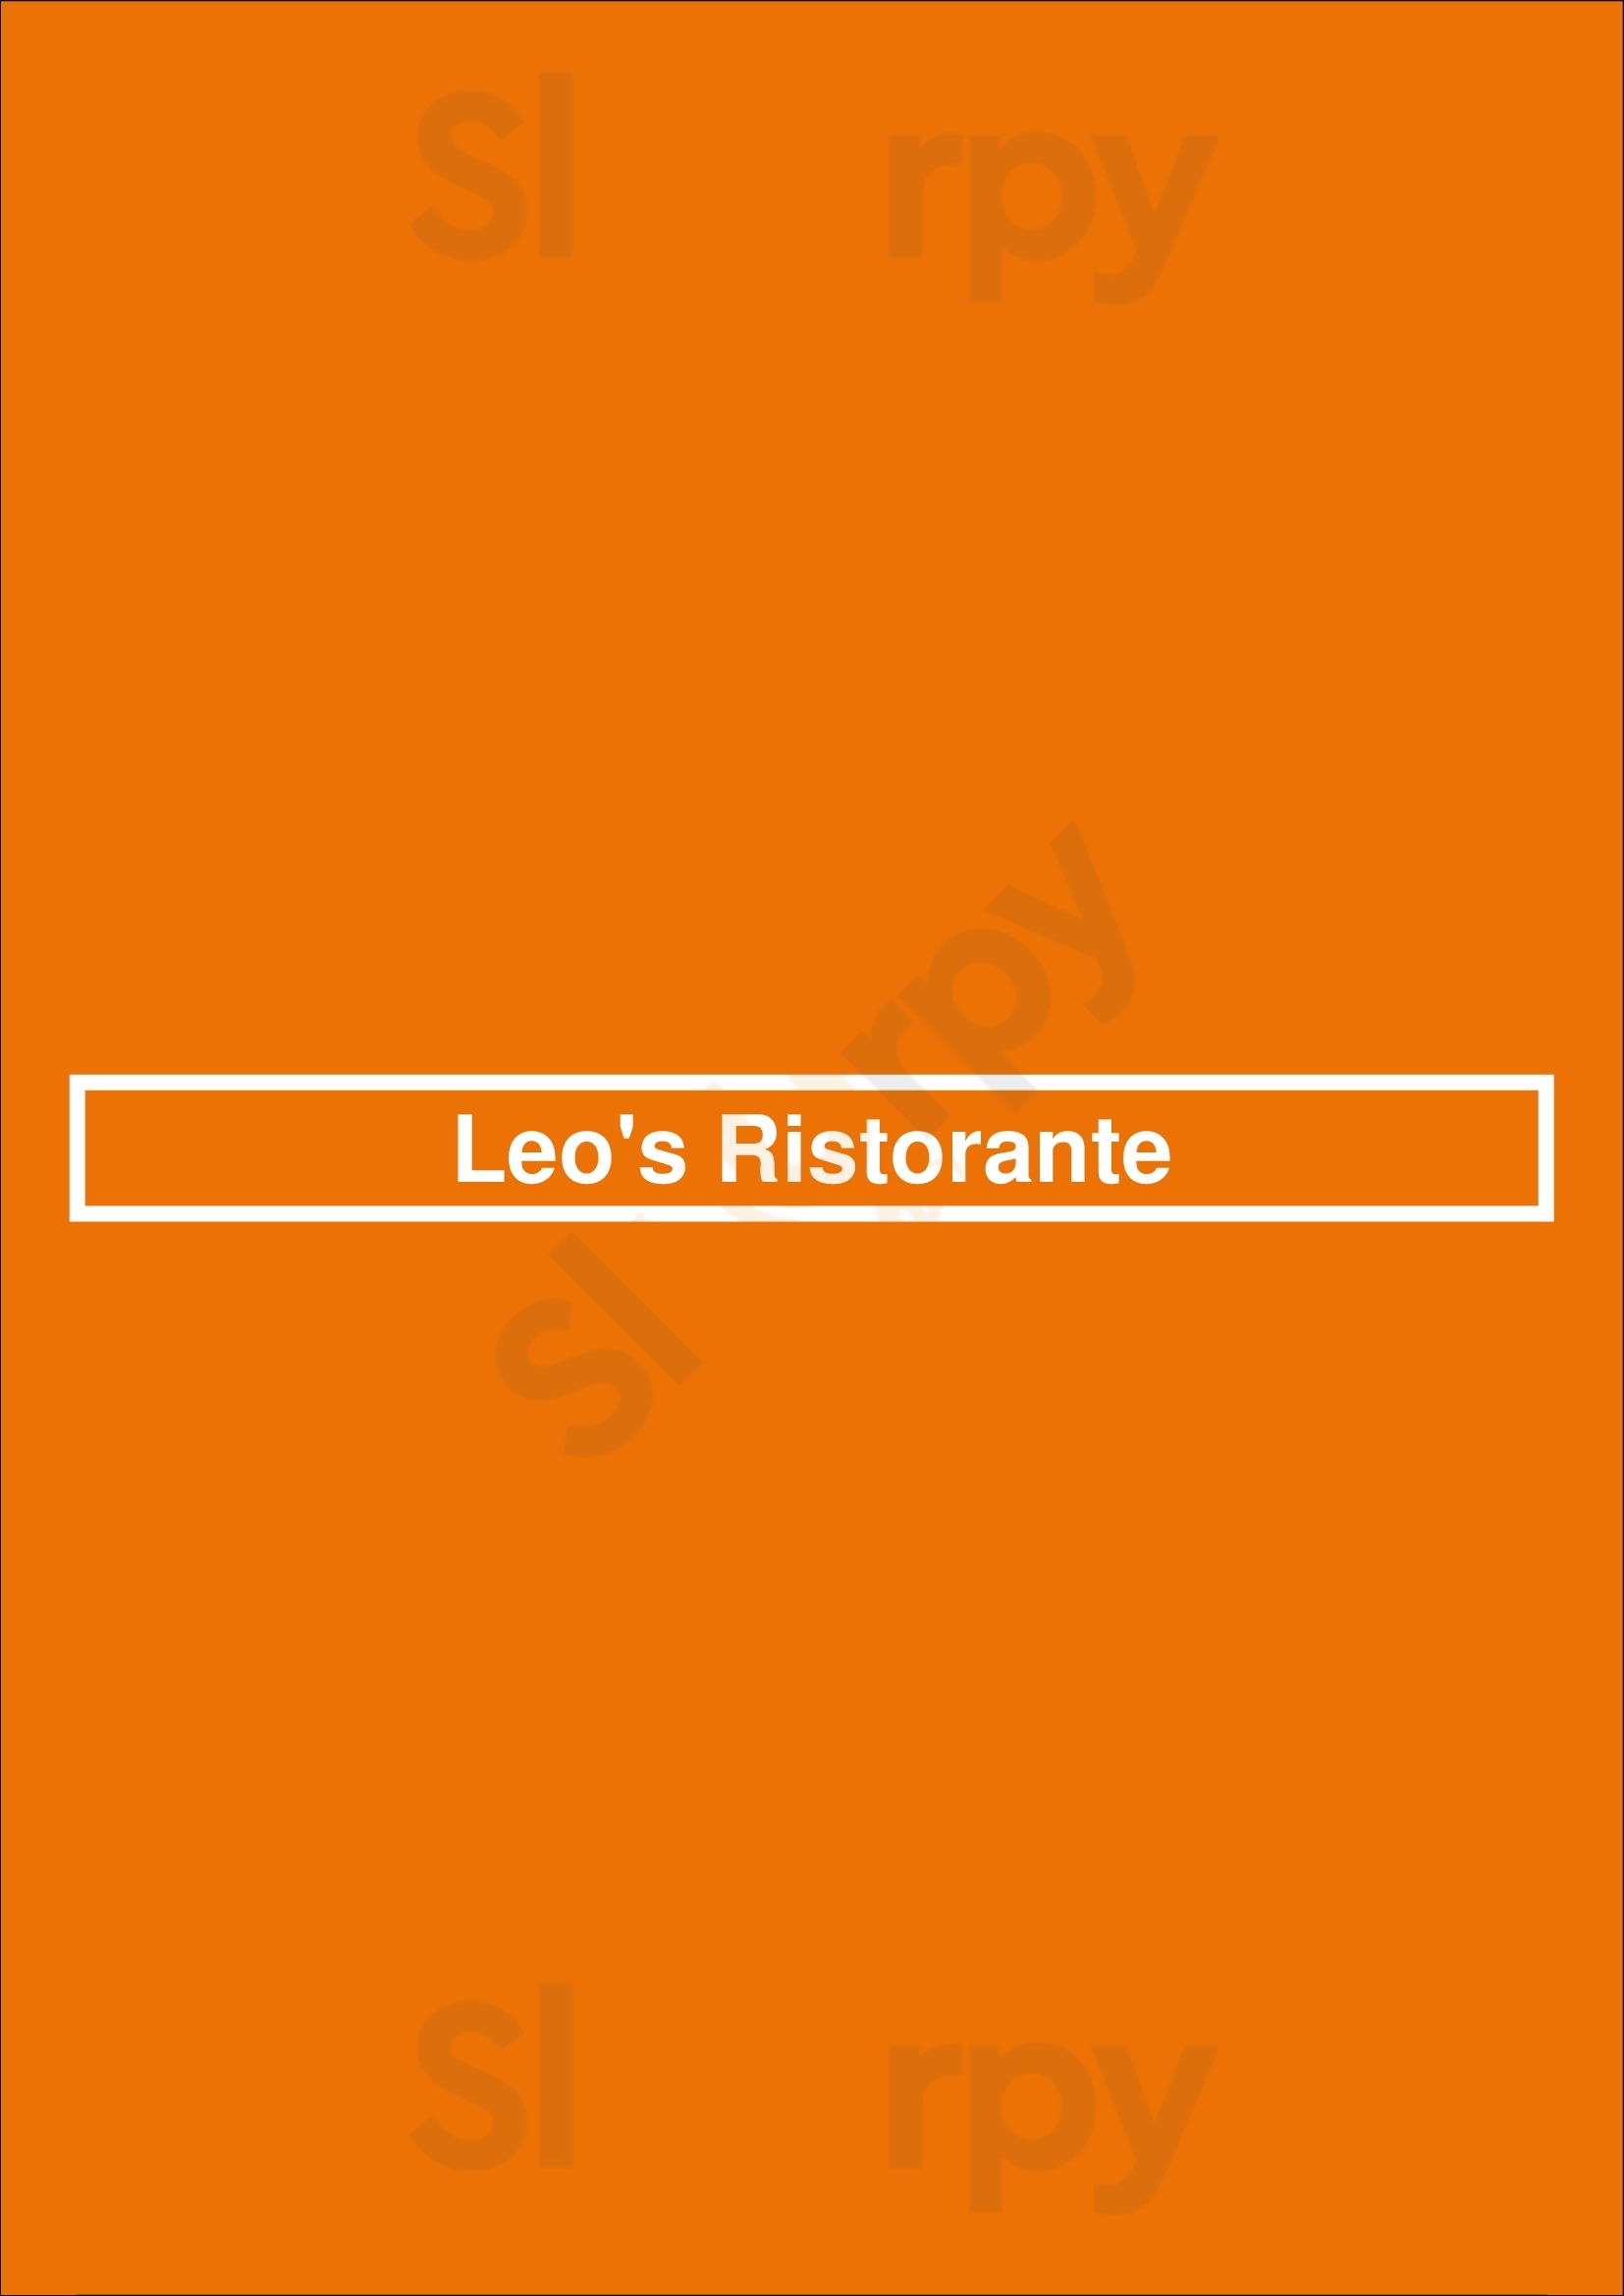 Leo's Ristorante Worcester Menu - 1